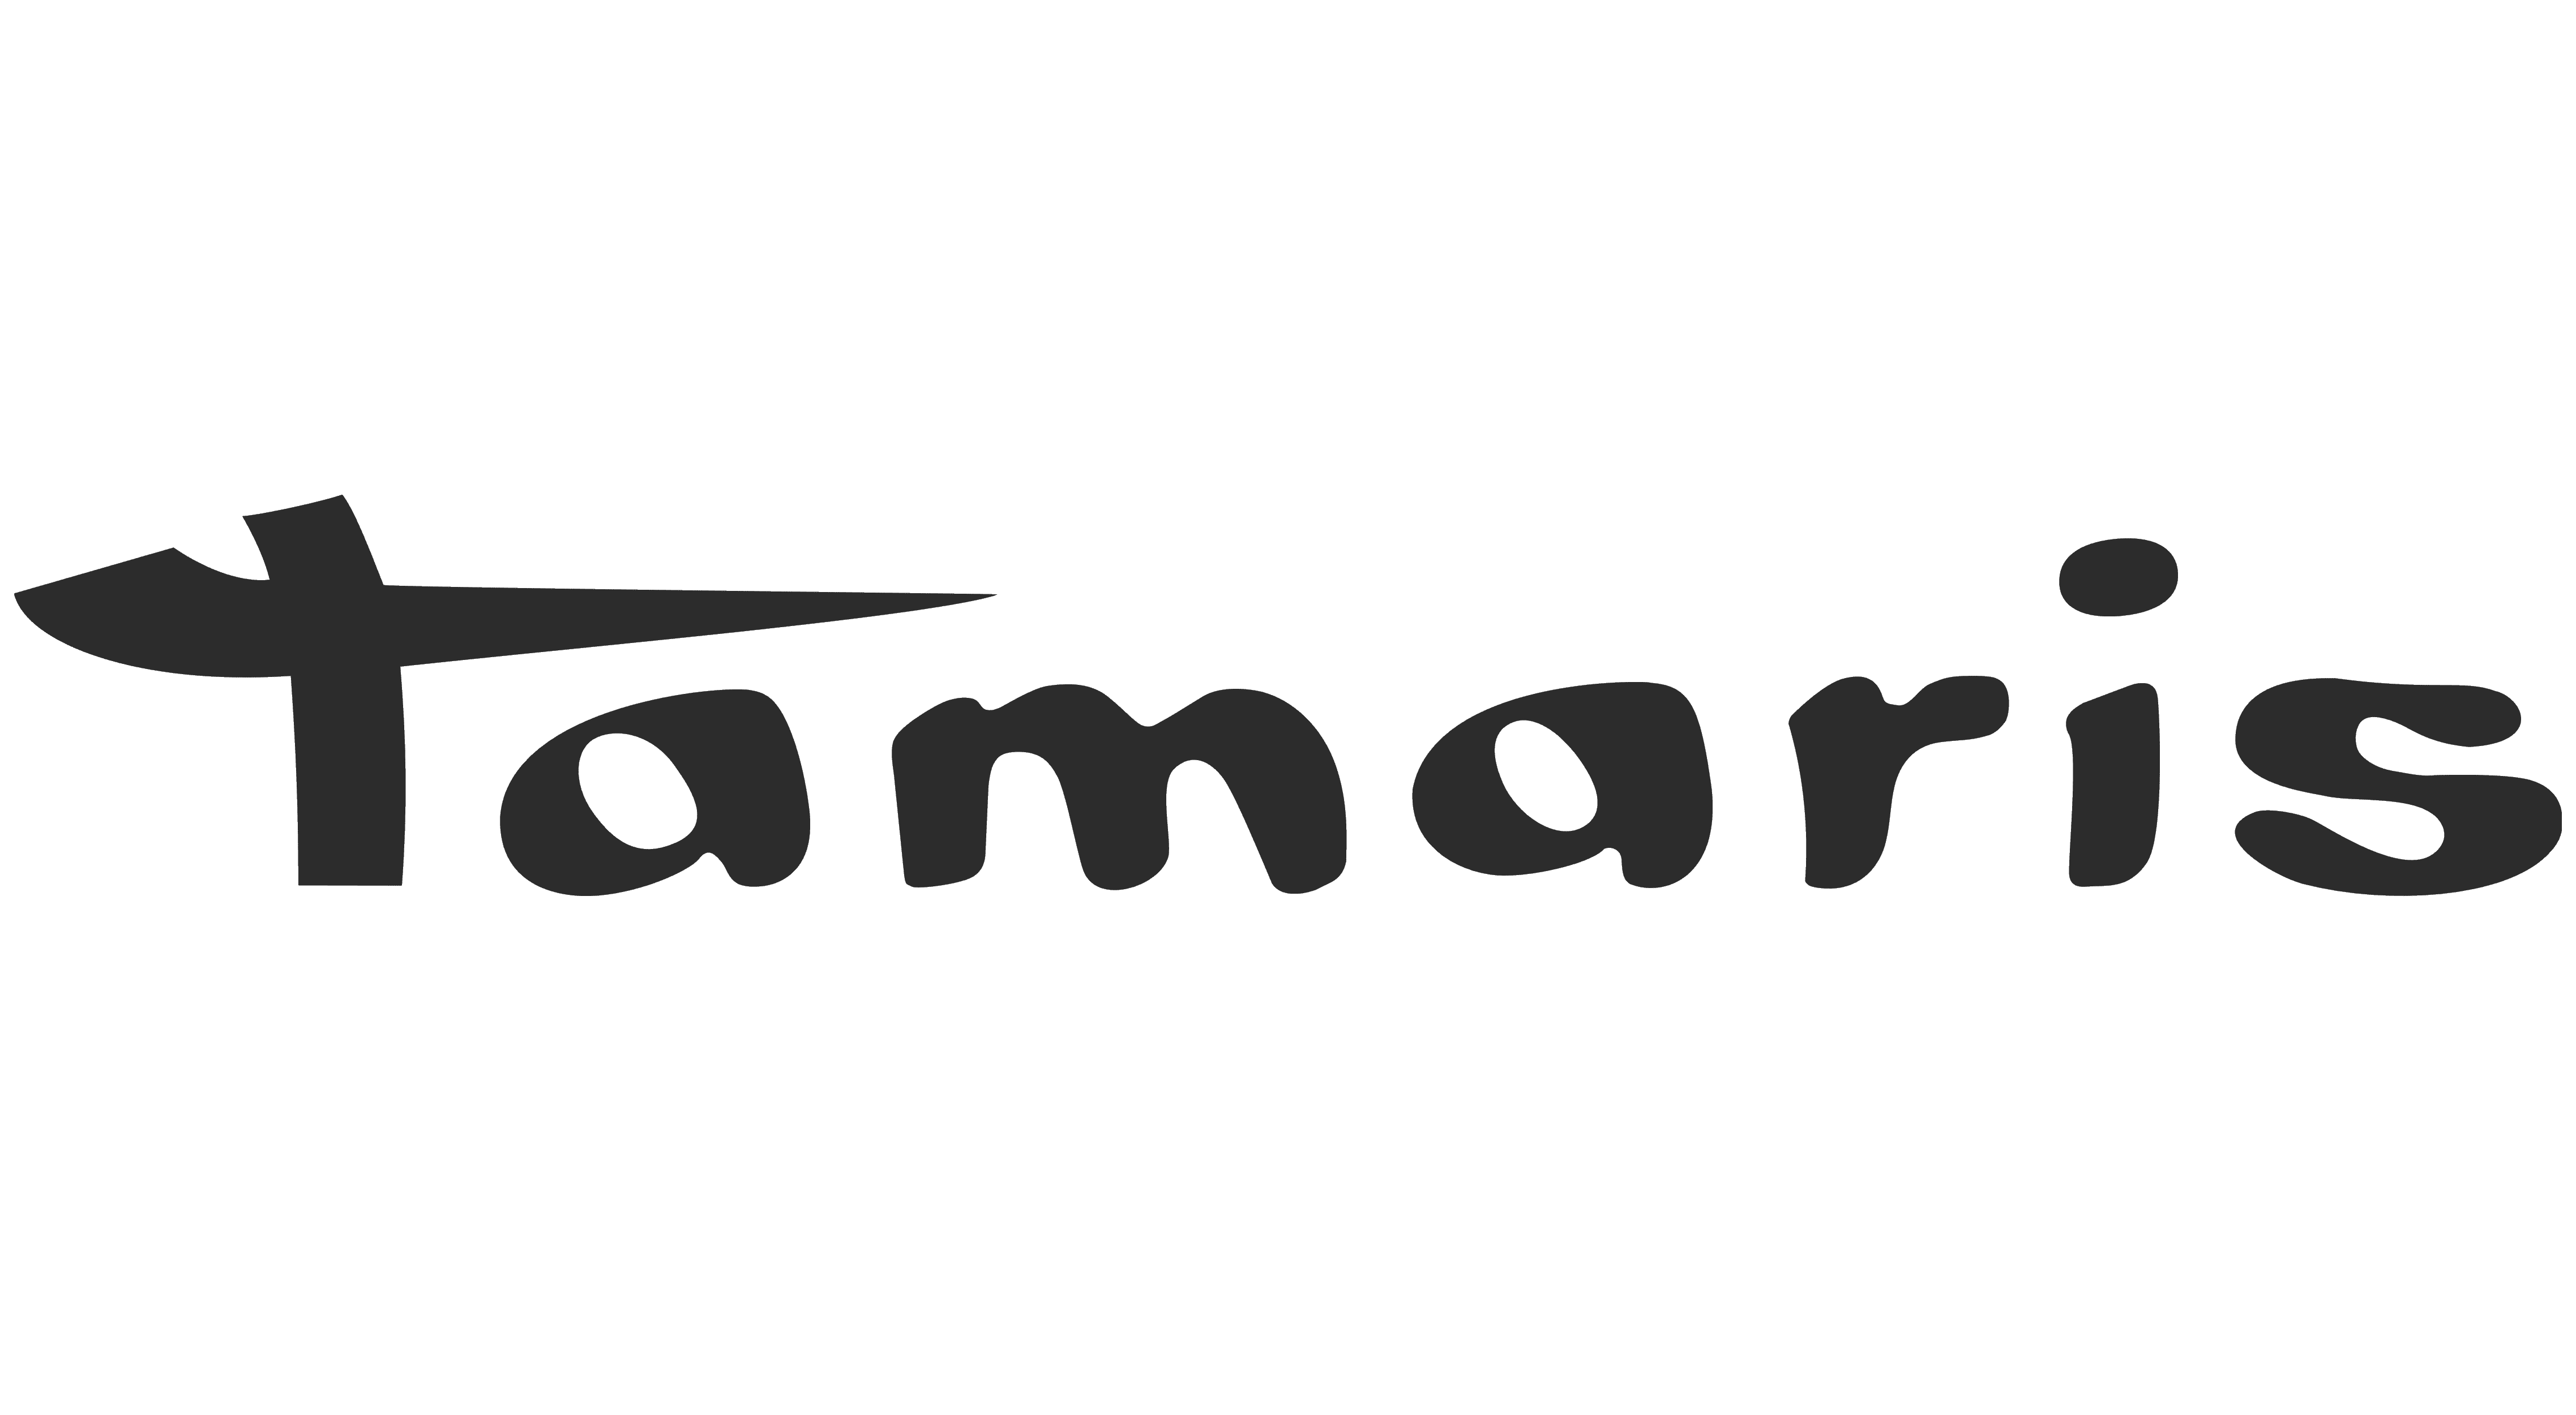 Lærd Mål salon Tamaris Logo and symbol, meaning, history, PNG, brand